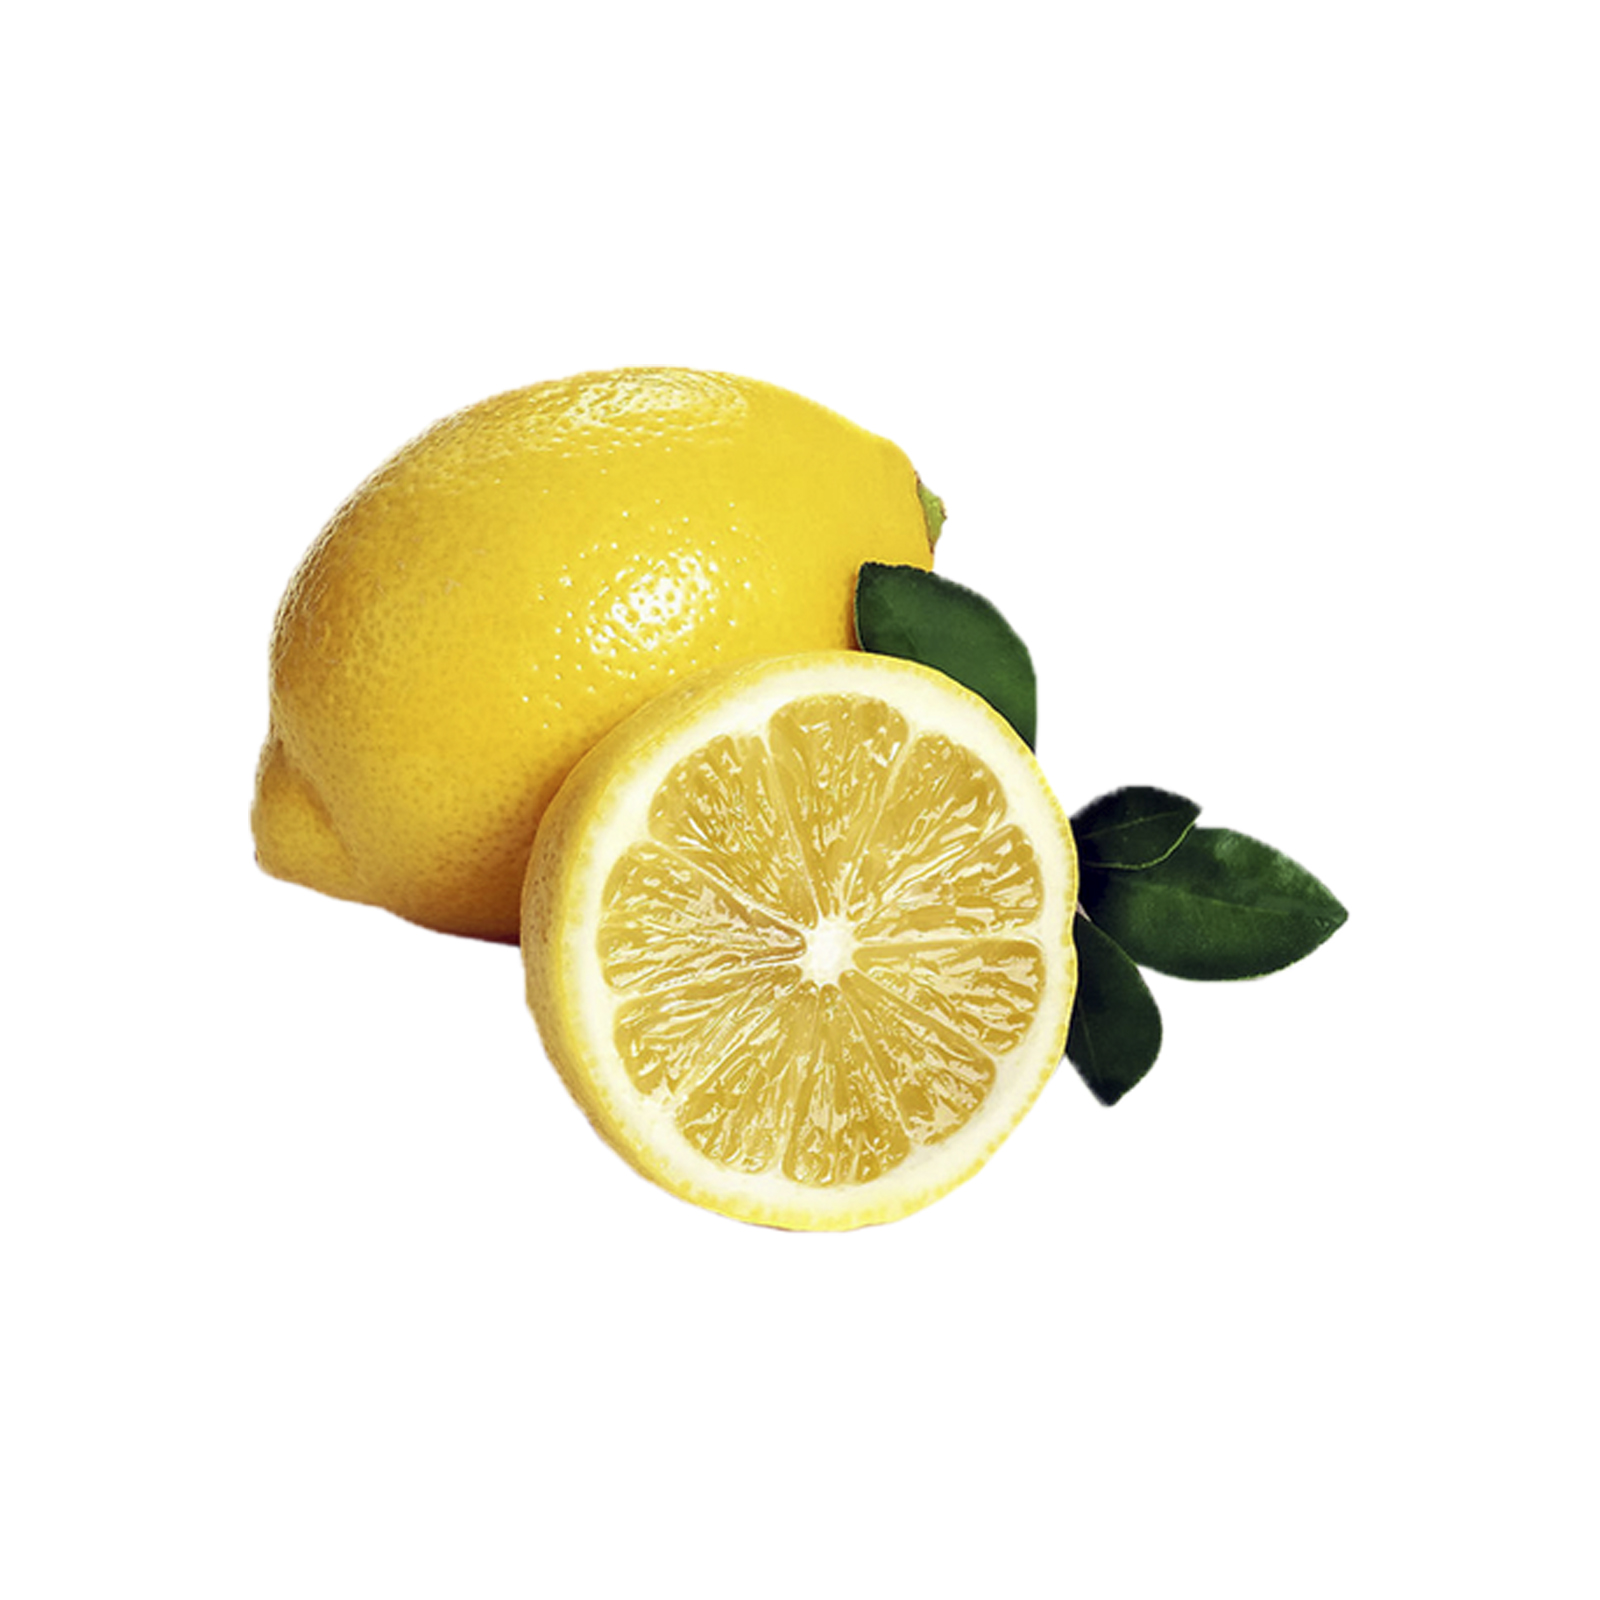 لیمو ترش سنگی درجه یک - 15 کیلوگرم